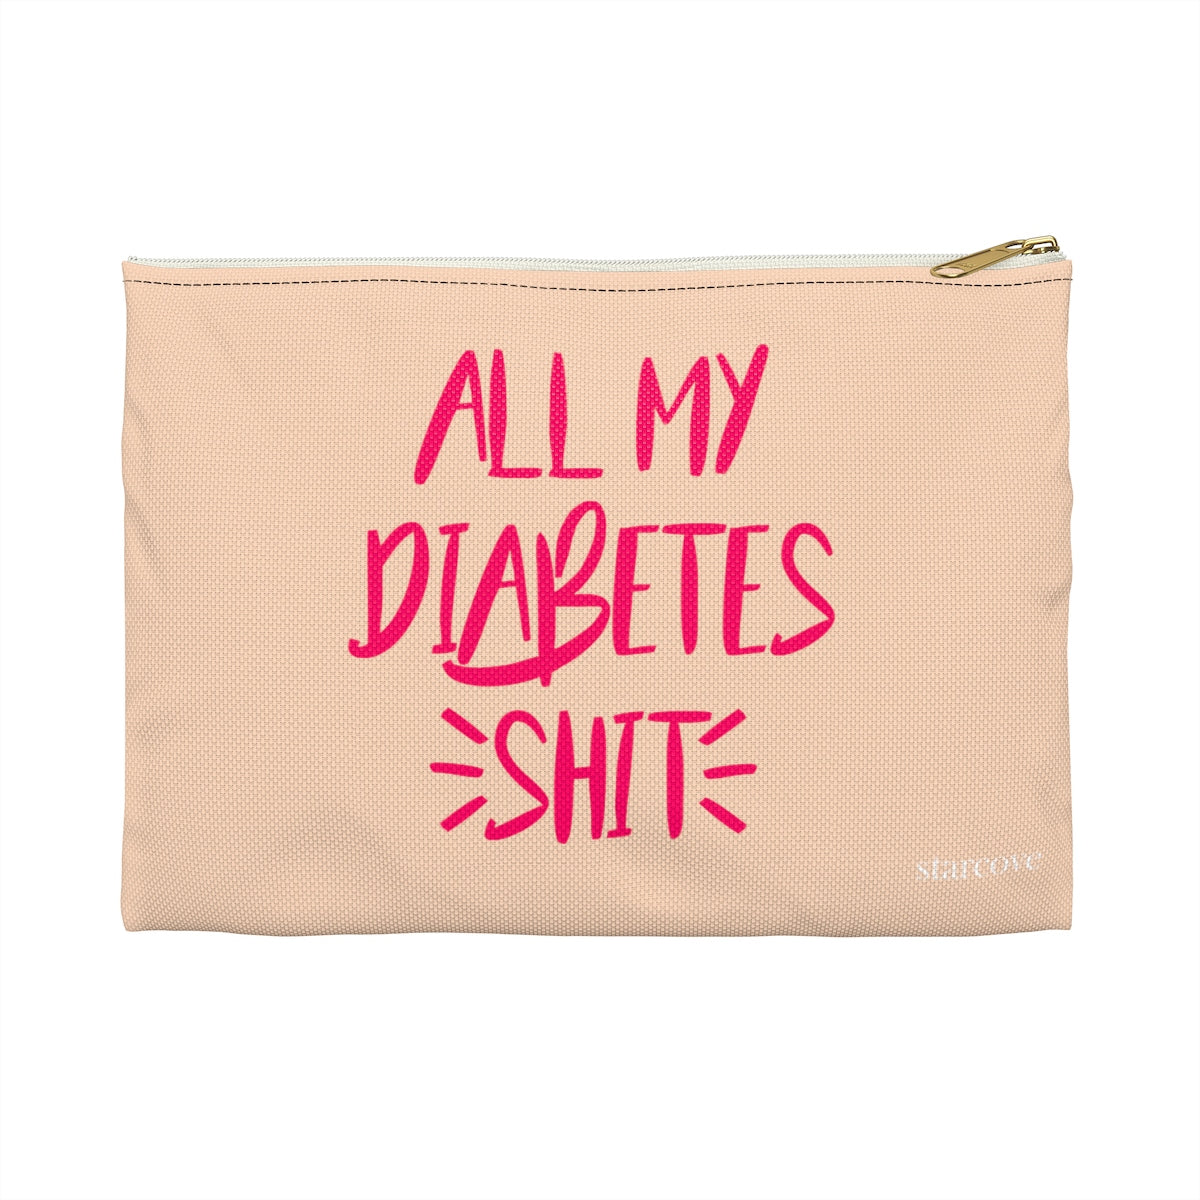 Diabetes Supply Bag, All My Diabetes Shit, Fun Diabetic Supply Travel Case, Cute Bag Gift, Type 1 diabetes, Accessory Flat Zipper Pouch Bag Starcove Fashion